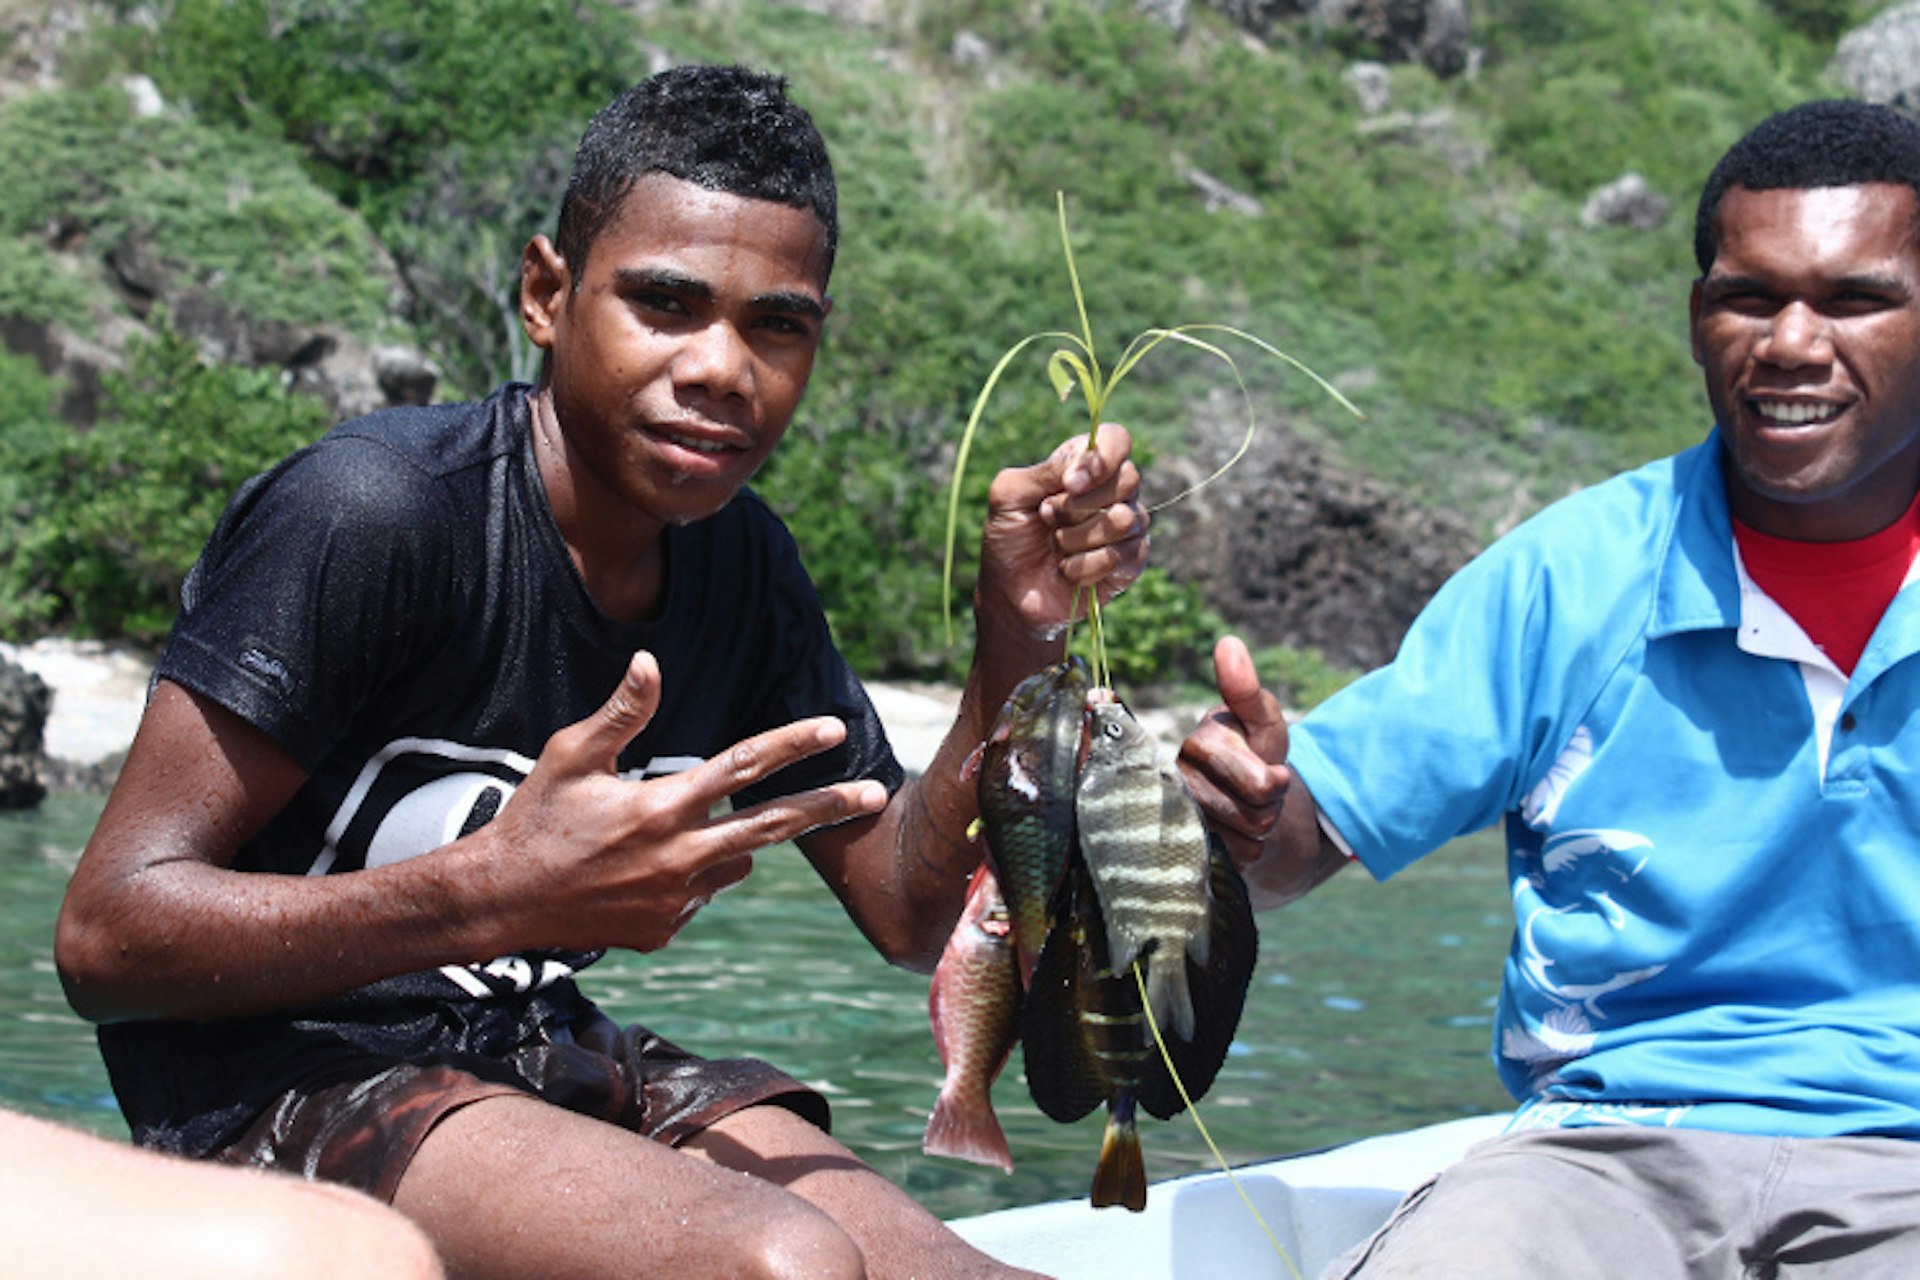 Catch of the day fishing in Fiji. Image by Luke Durkin / CC BY 2.0